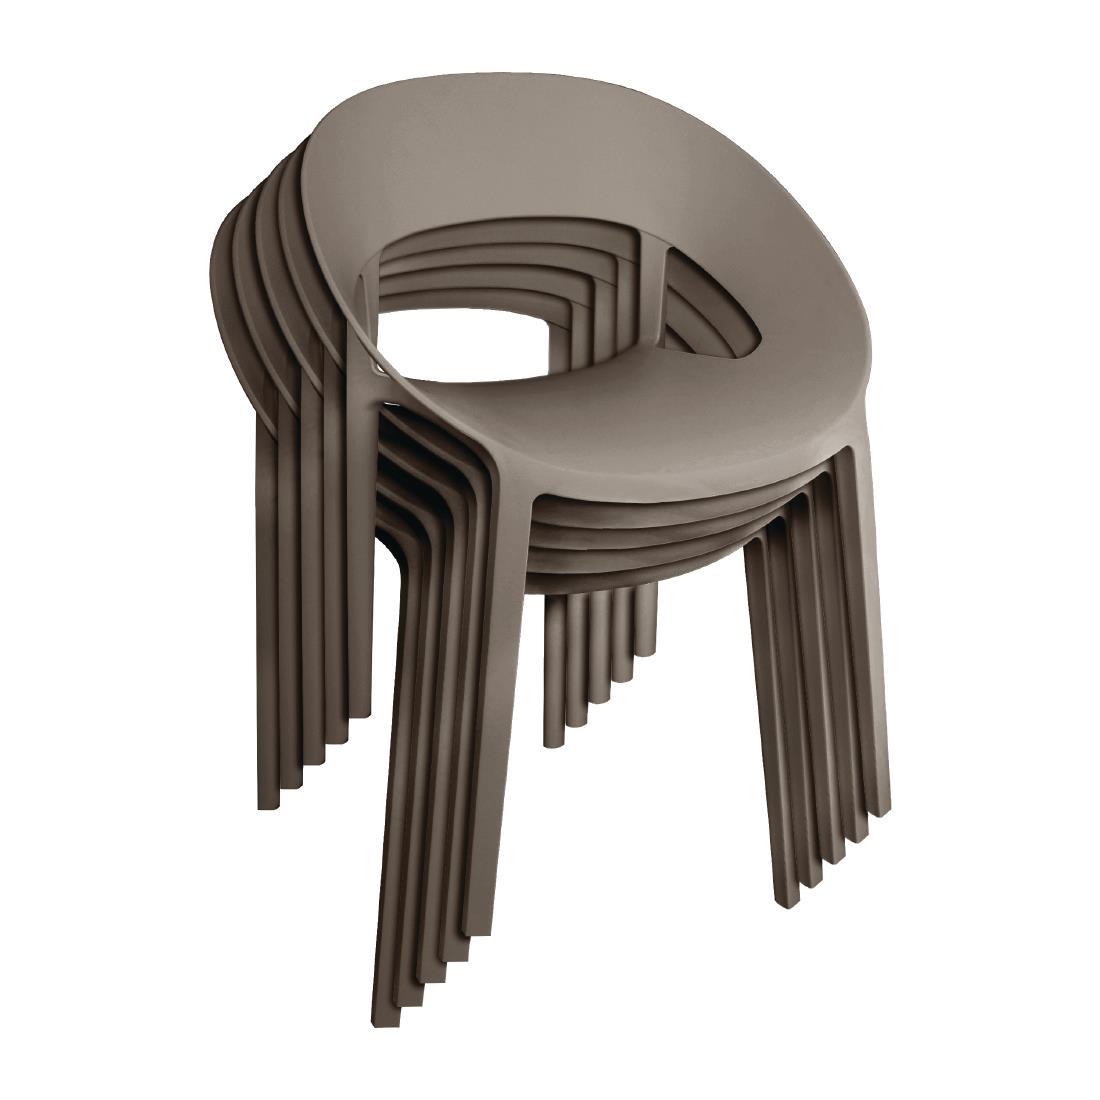 GR339 - Bolero PP Wraparound Chair Coffee (Pack 4) - GR339  - 4